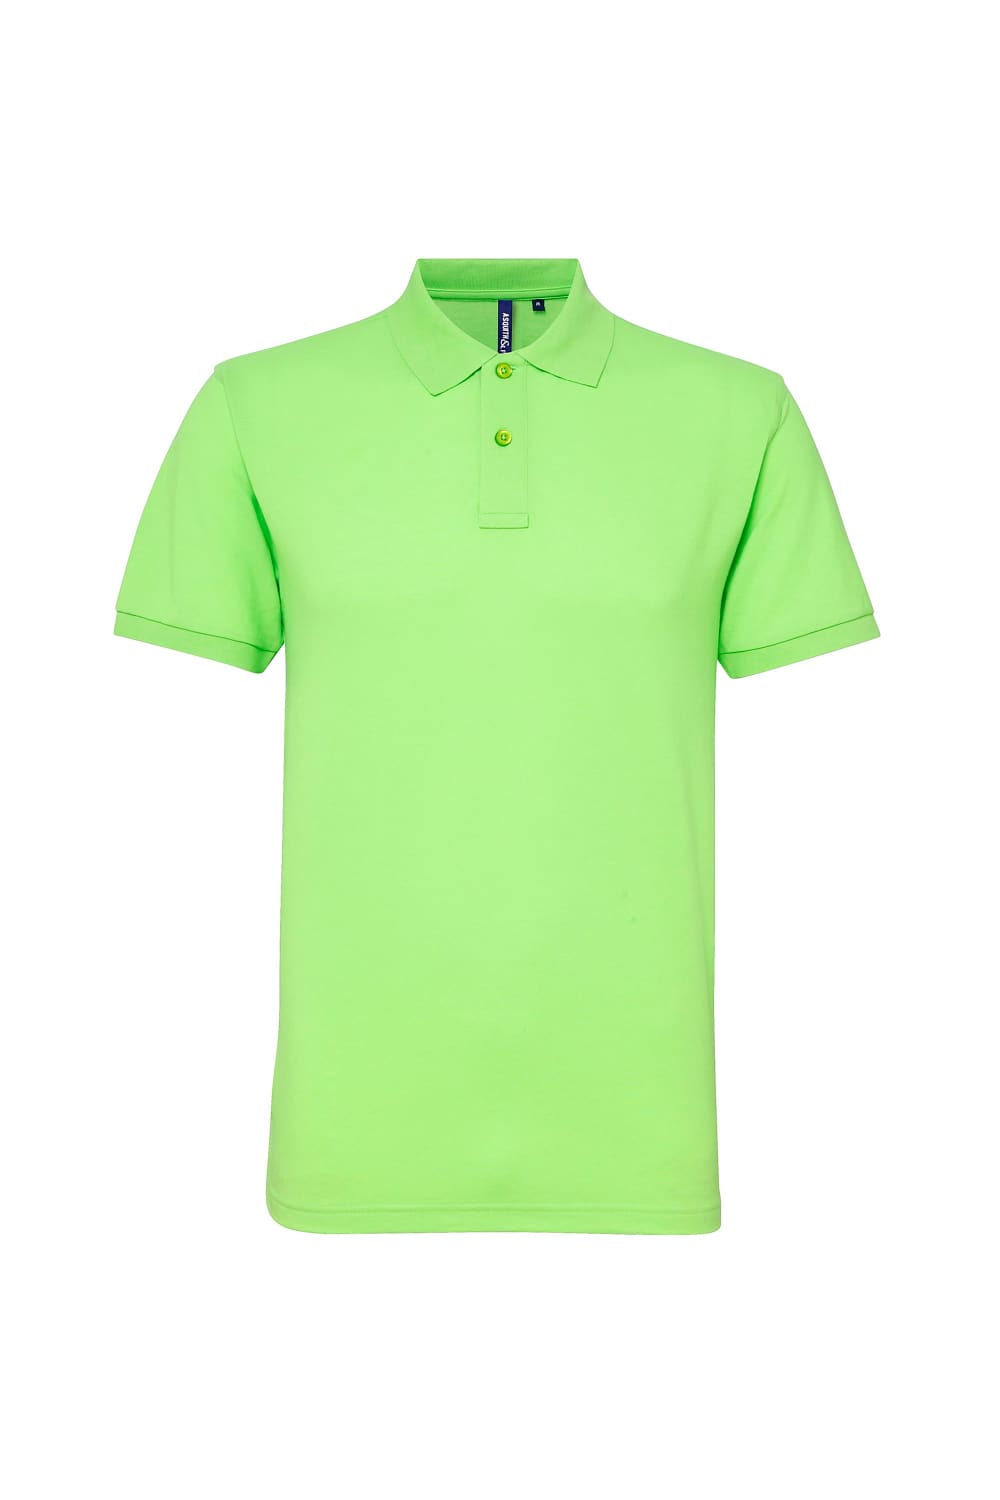 Asquith & Fox Mens Short Sleeve Performance Blend Polo Shirt (Neon Green)